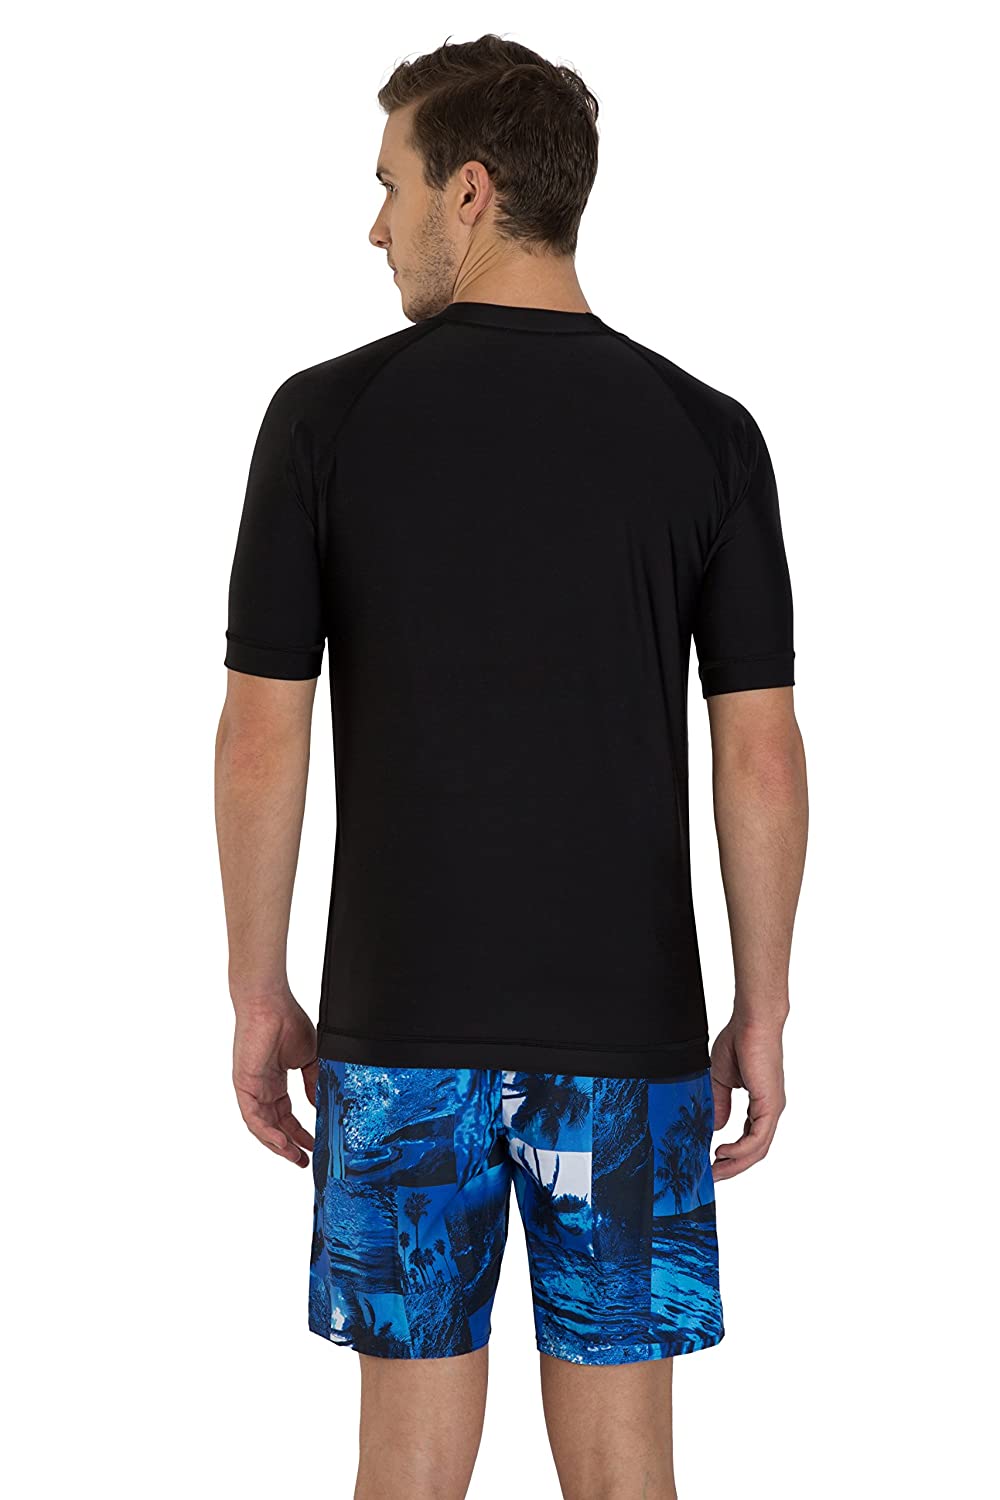 Speedo Male Swimwear Short Sleeve Suntop - Best Price online Prokicksports.com